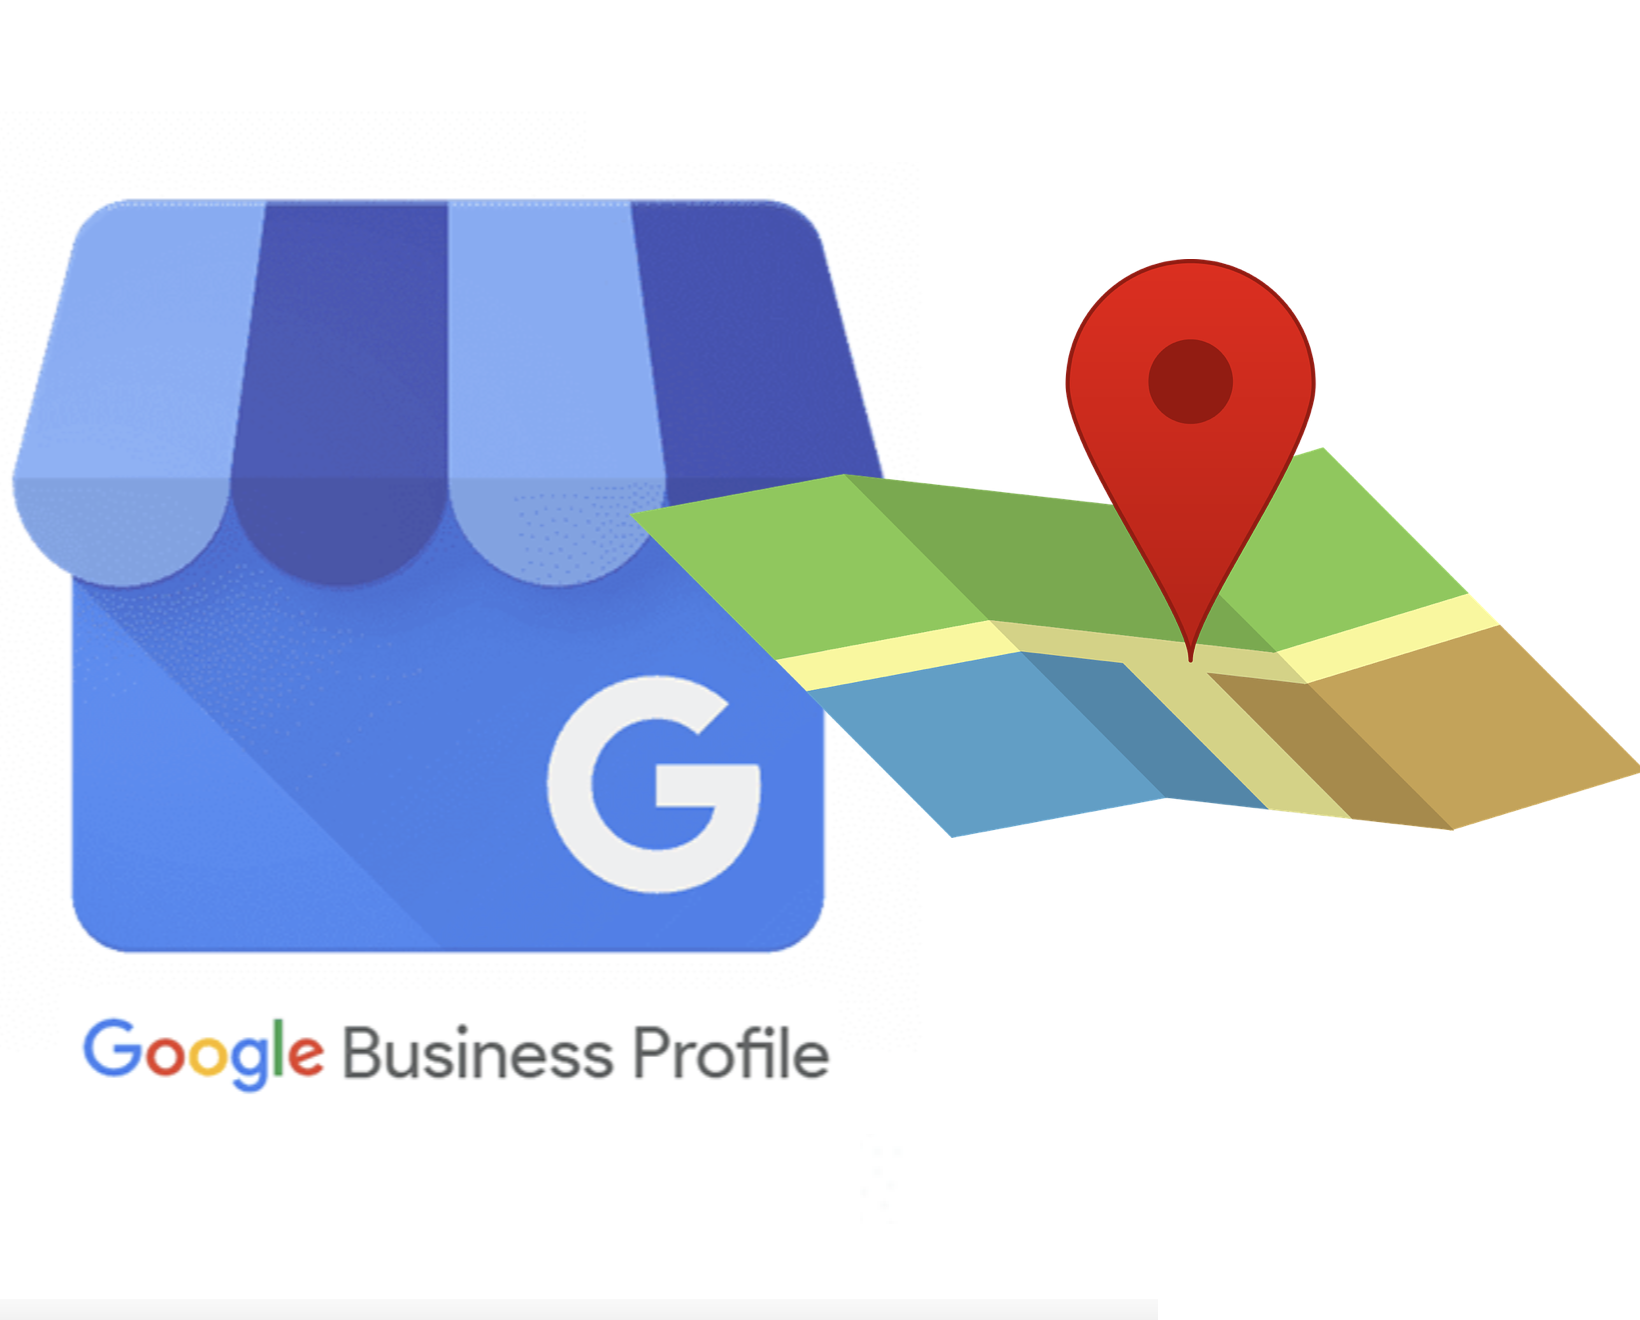 Linkdaddy Google Business Profile Management